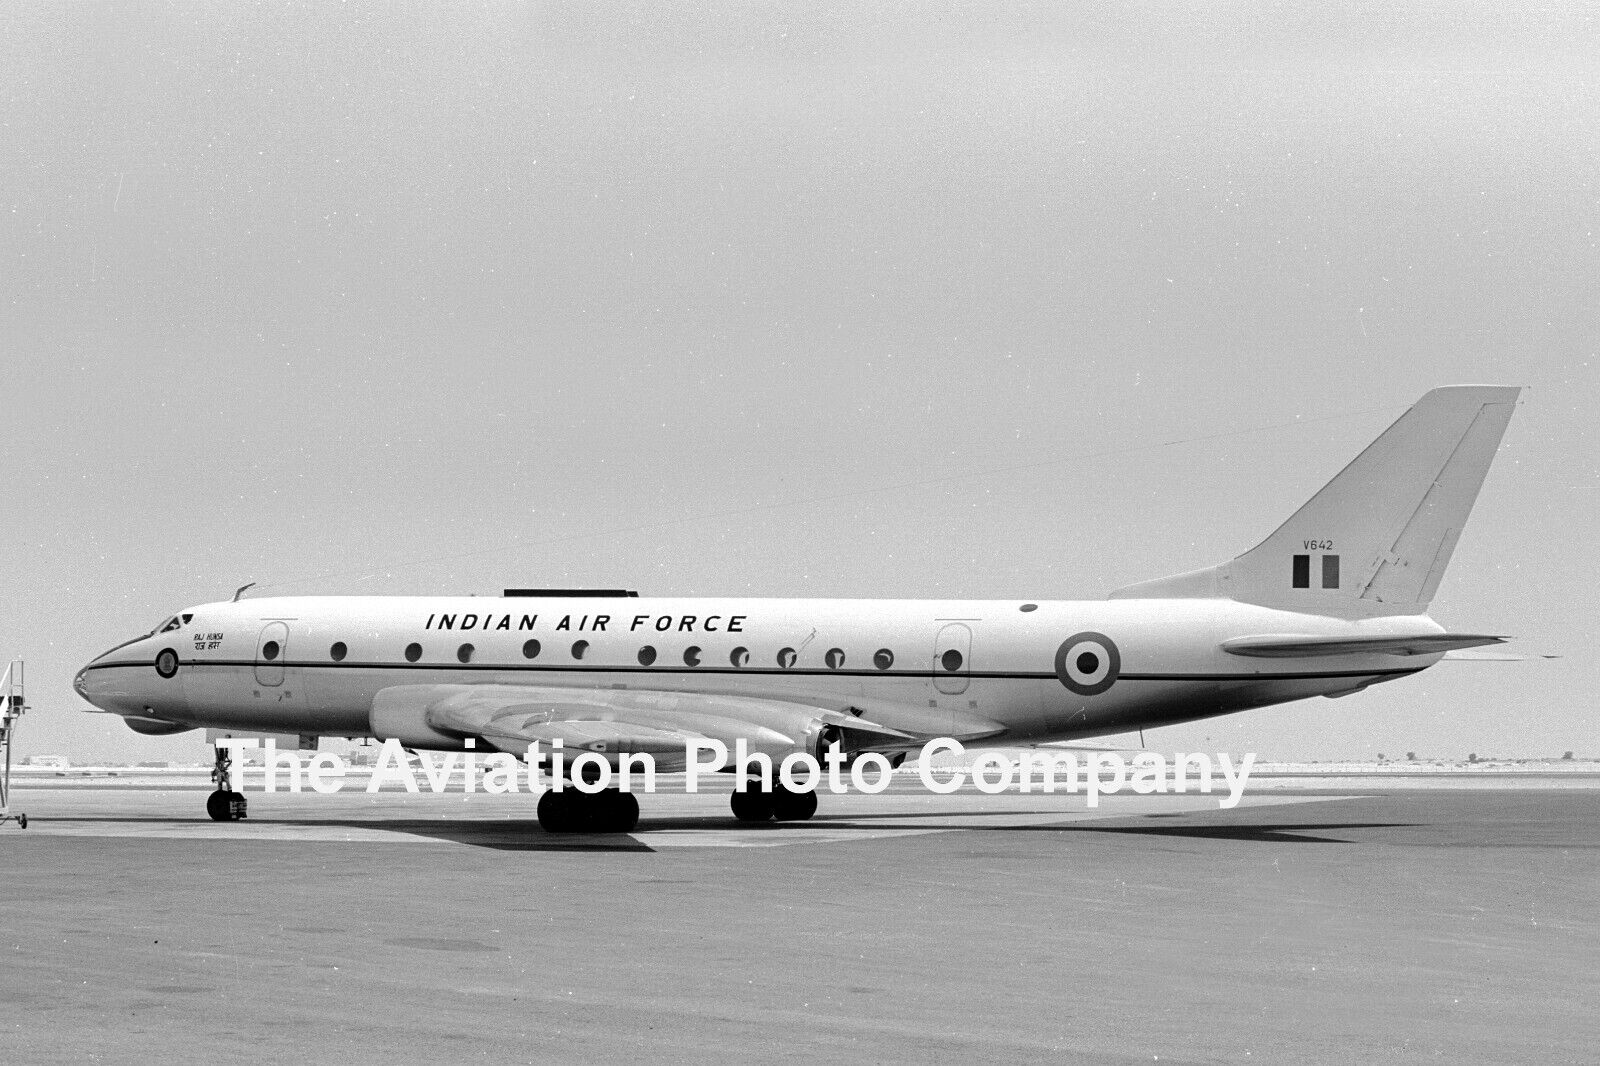 Indian Air Force Tupolev Tu-124 V-642 at Dubai (1972) Photograph